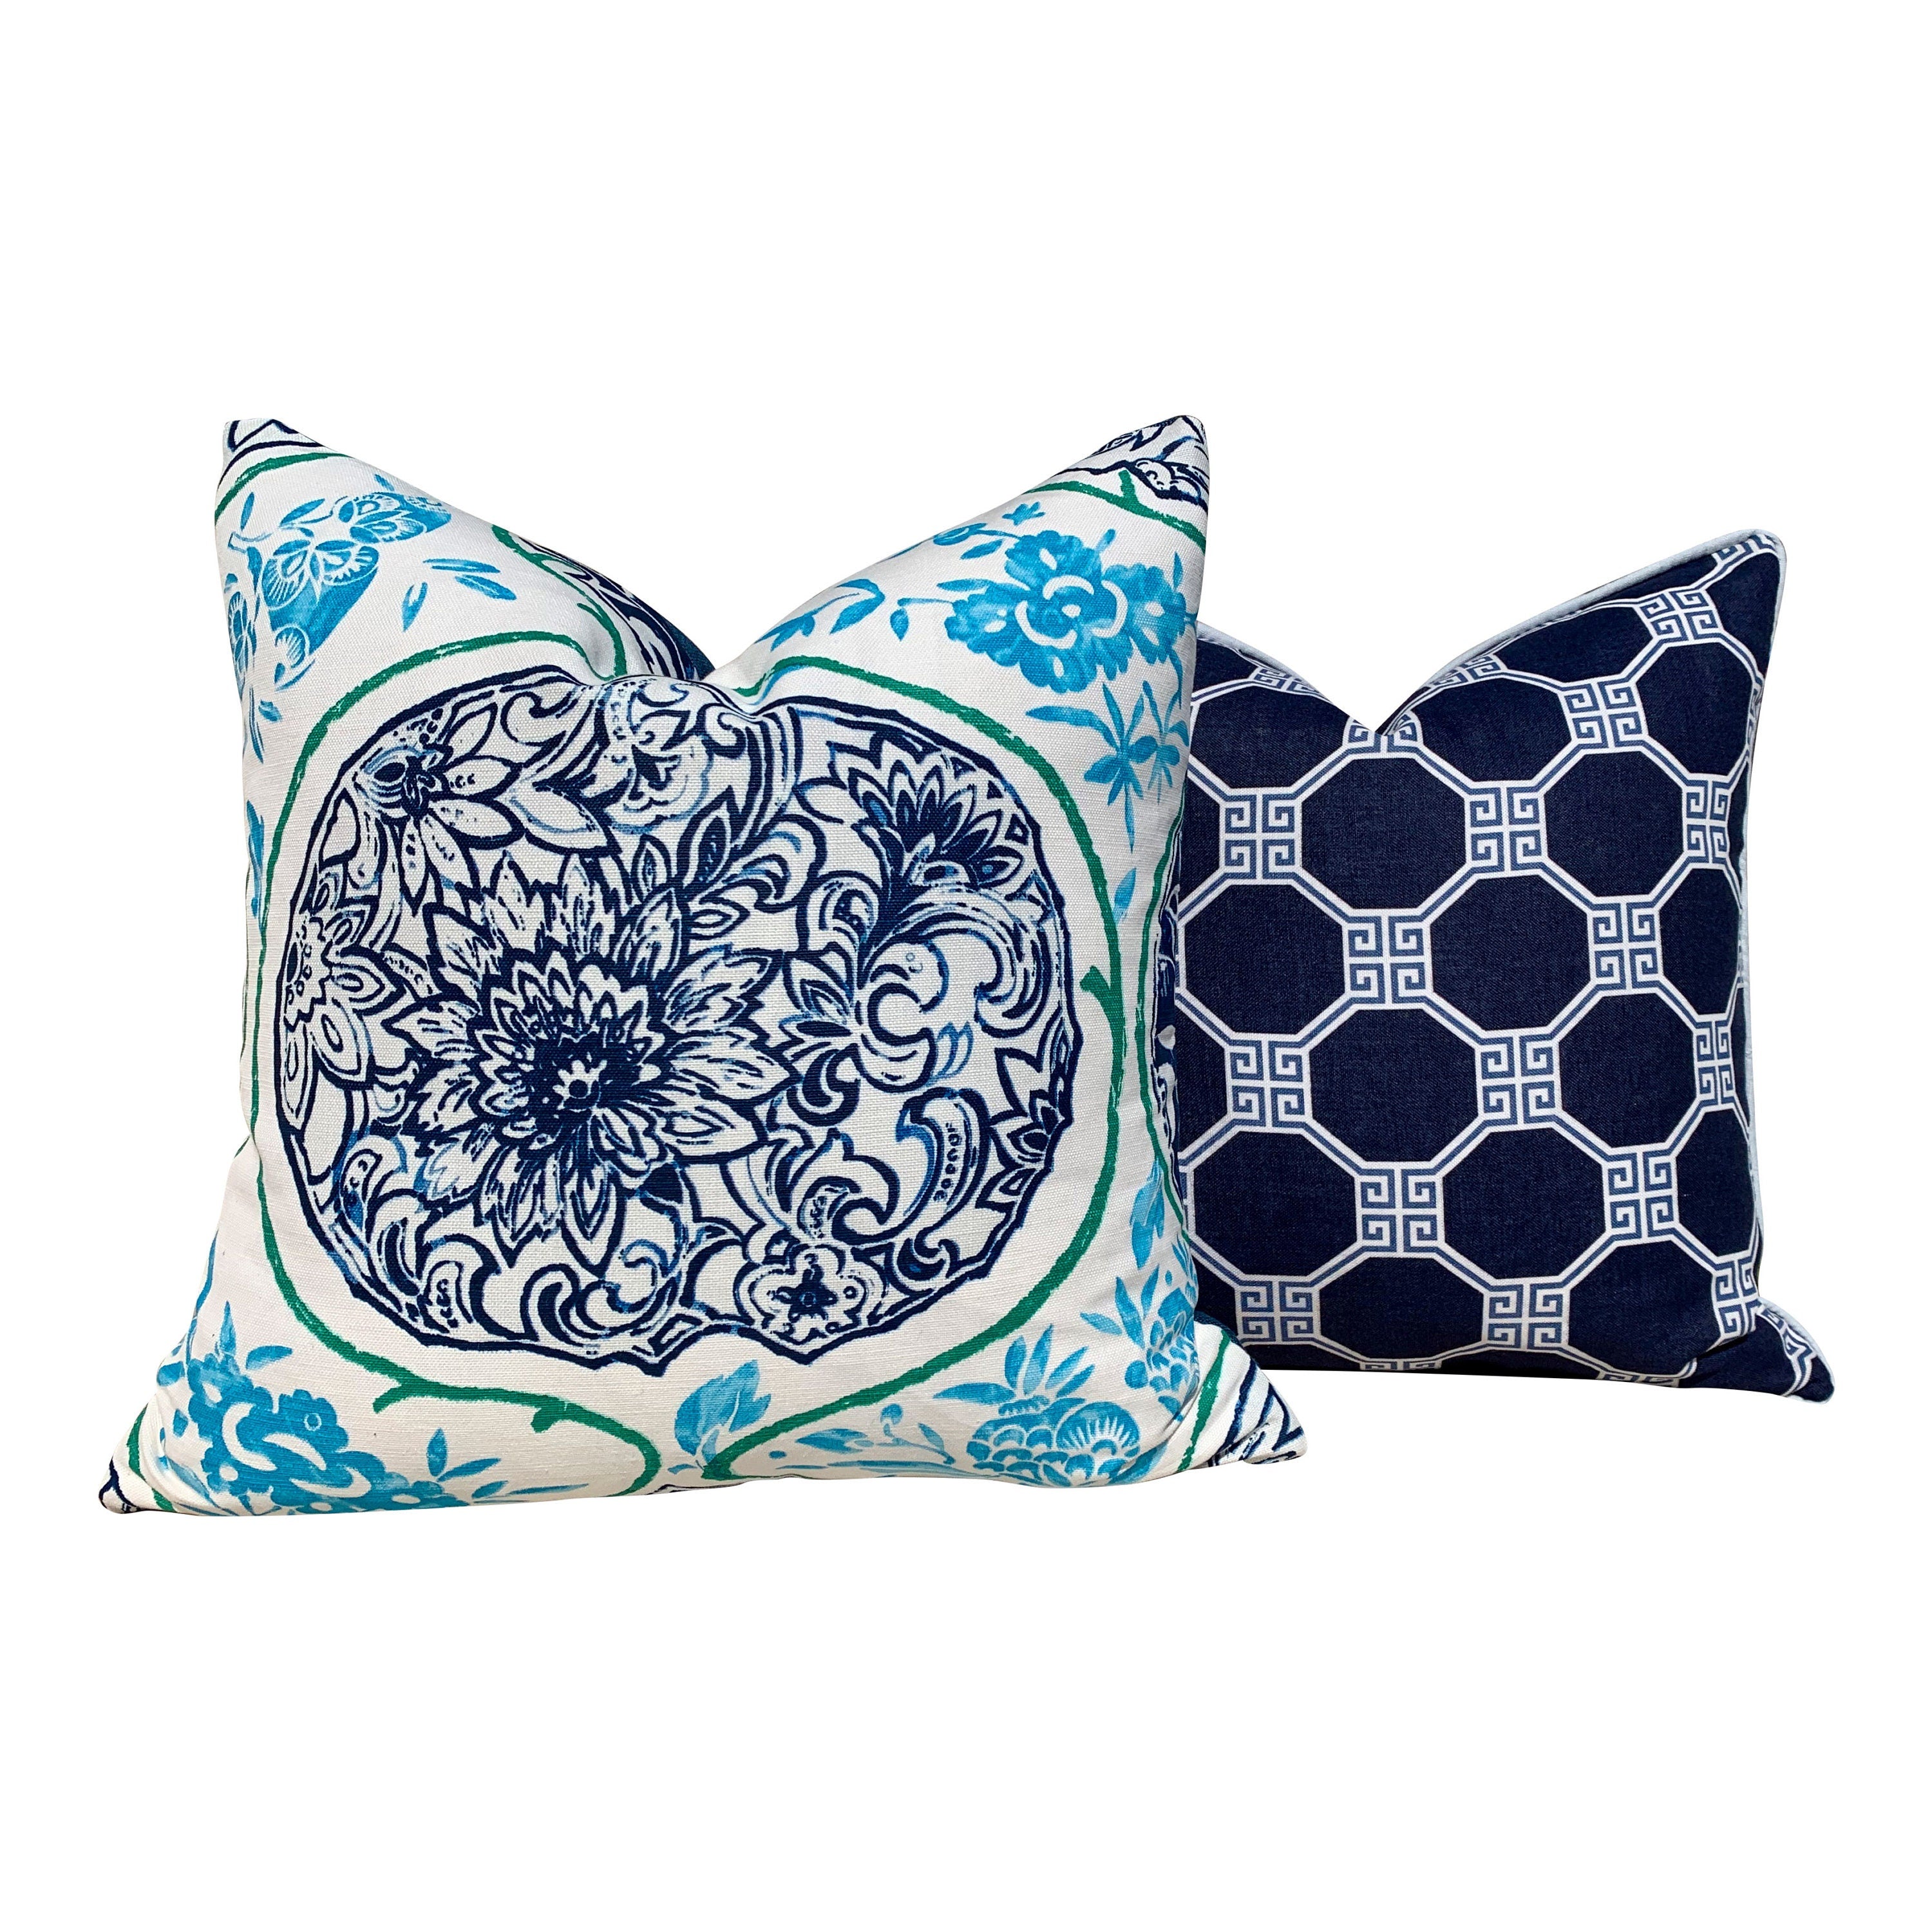 Schumacher Octavia Pillow Navy Blue. Greek Key Lumbar Pillow, Lumbar Navy  Pillow, Accent Cushion, Decorative Pillow Cover